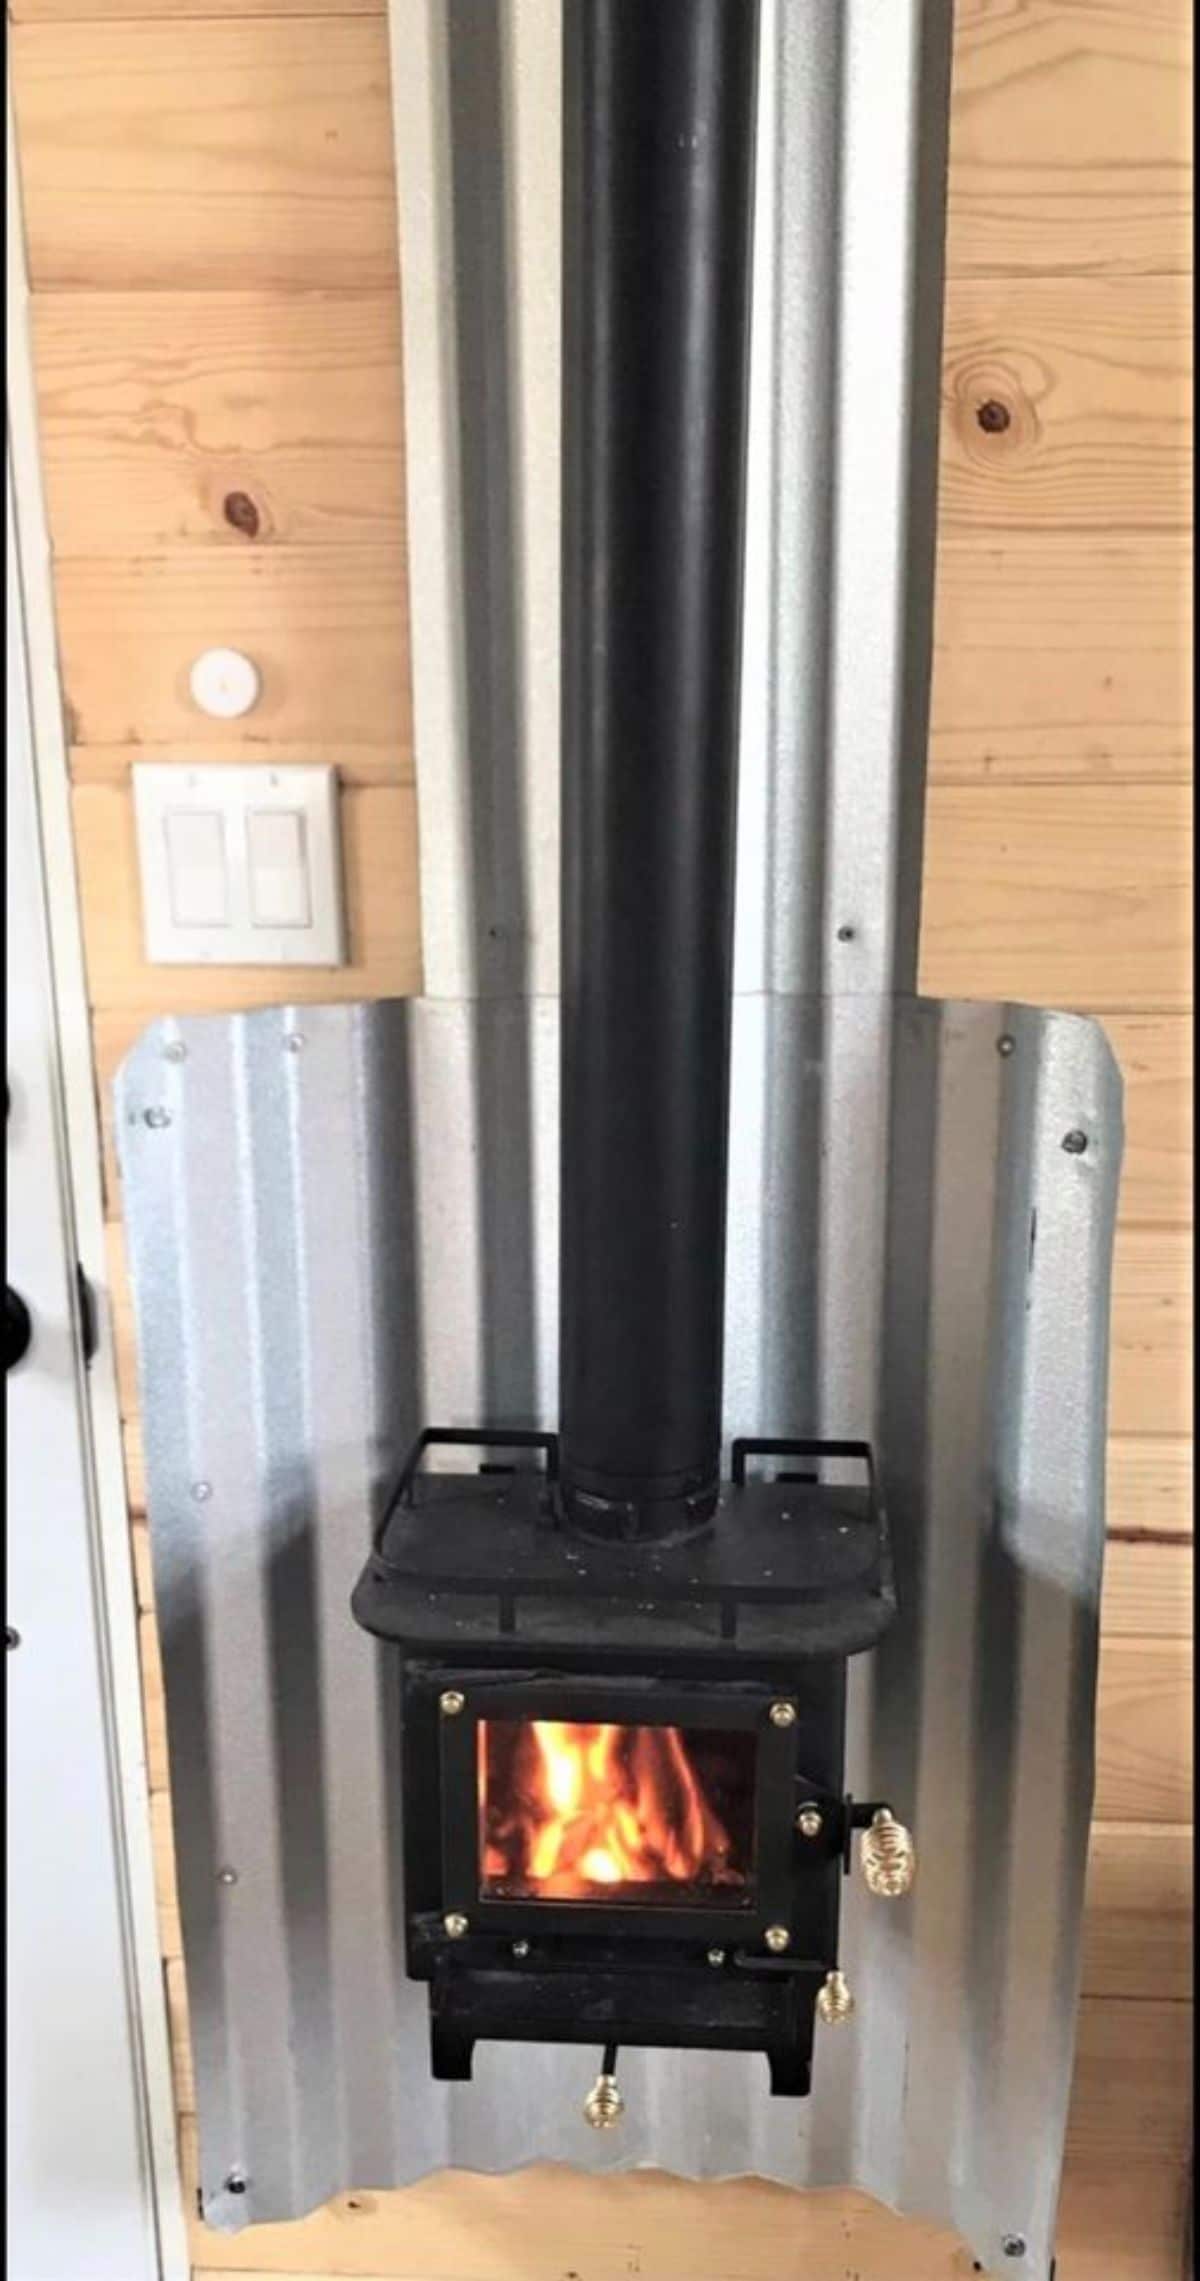 CUB mini wood stove